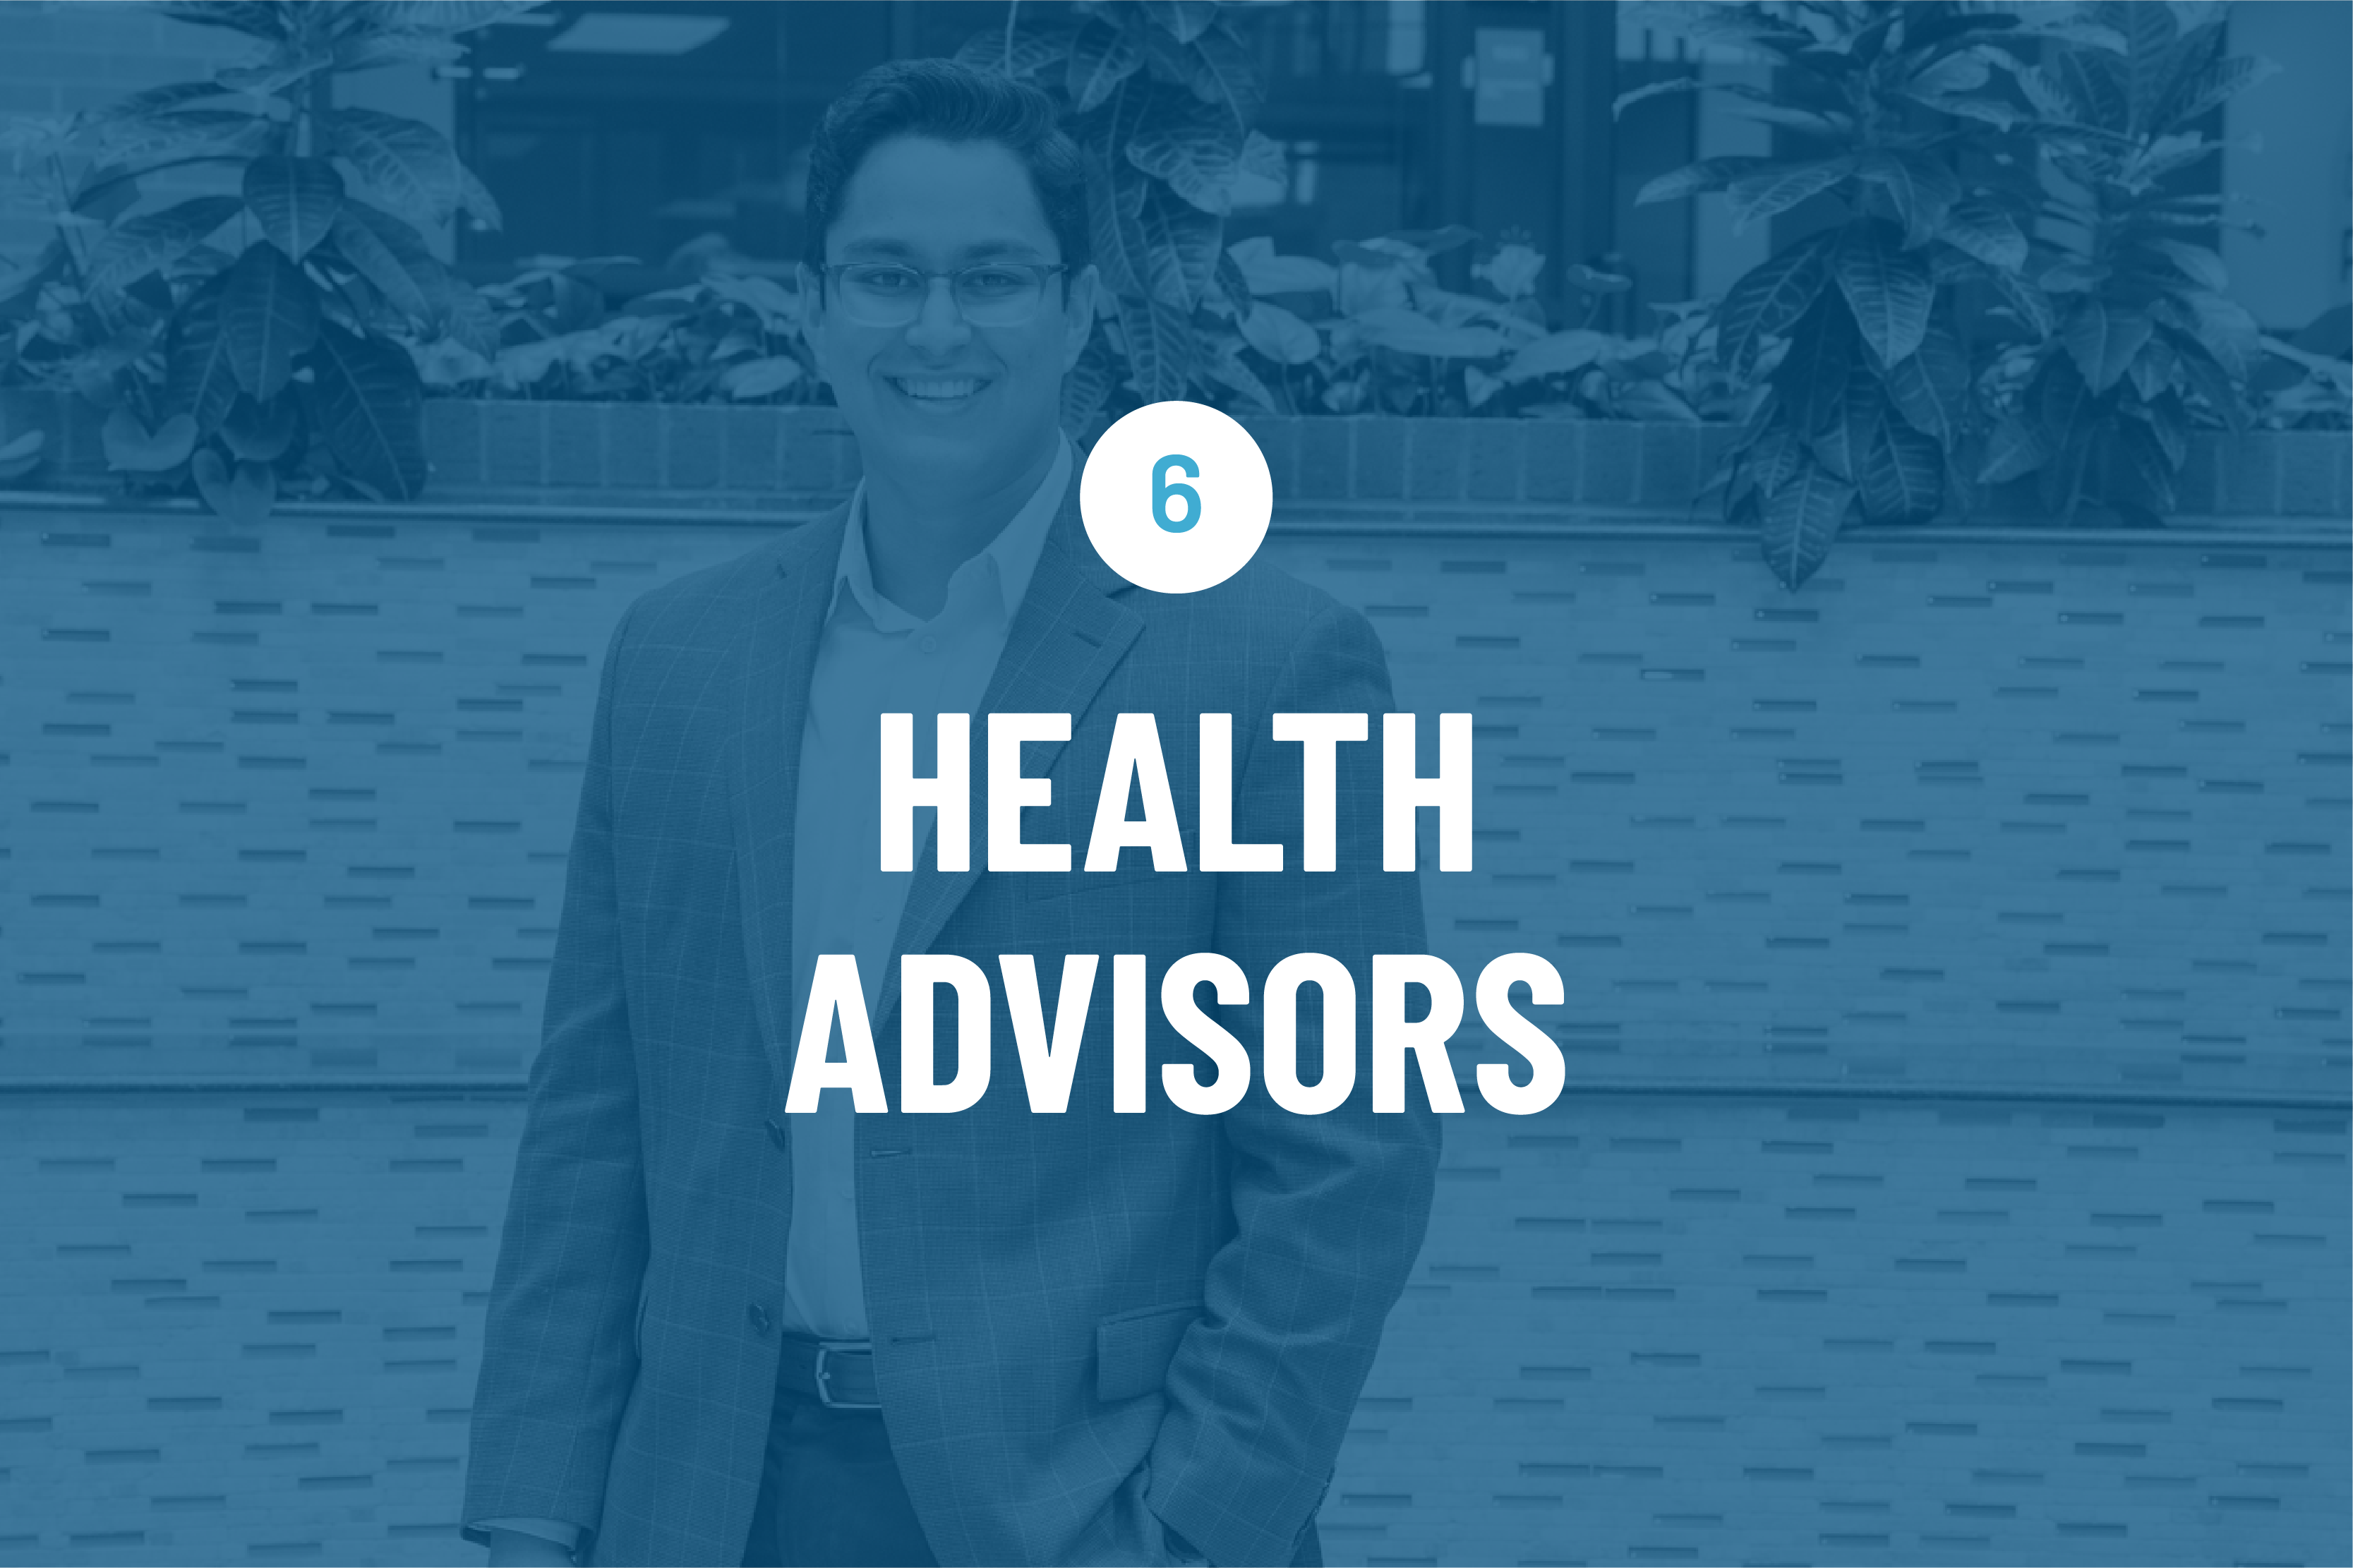 6 - Health Advisors